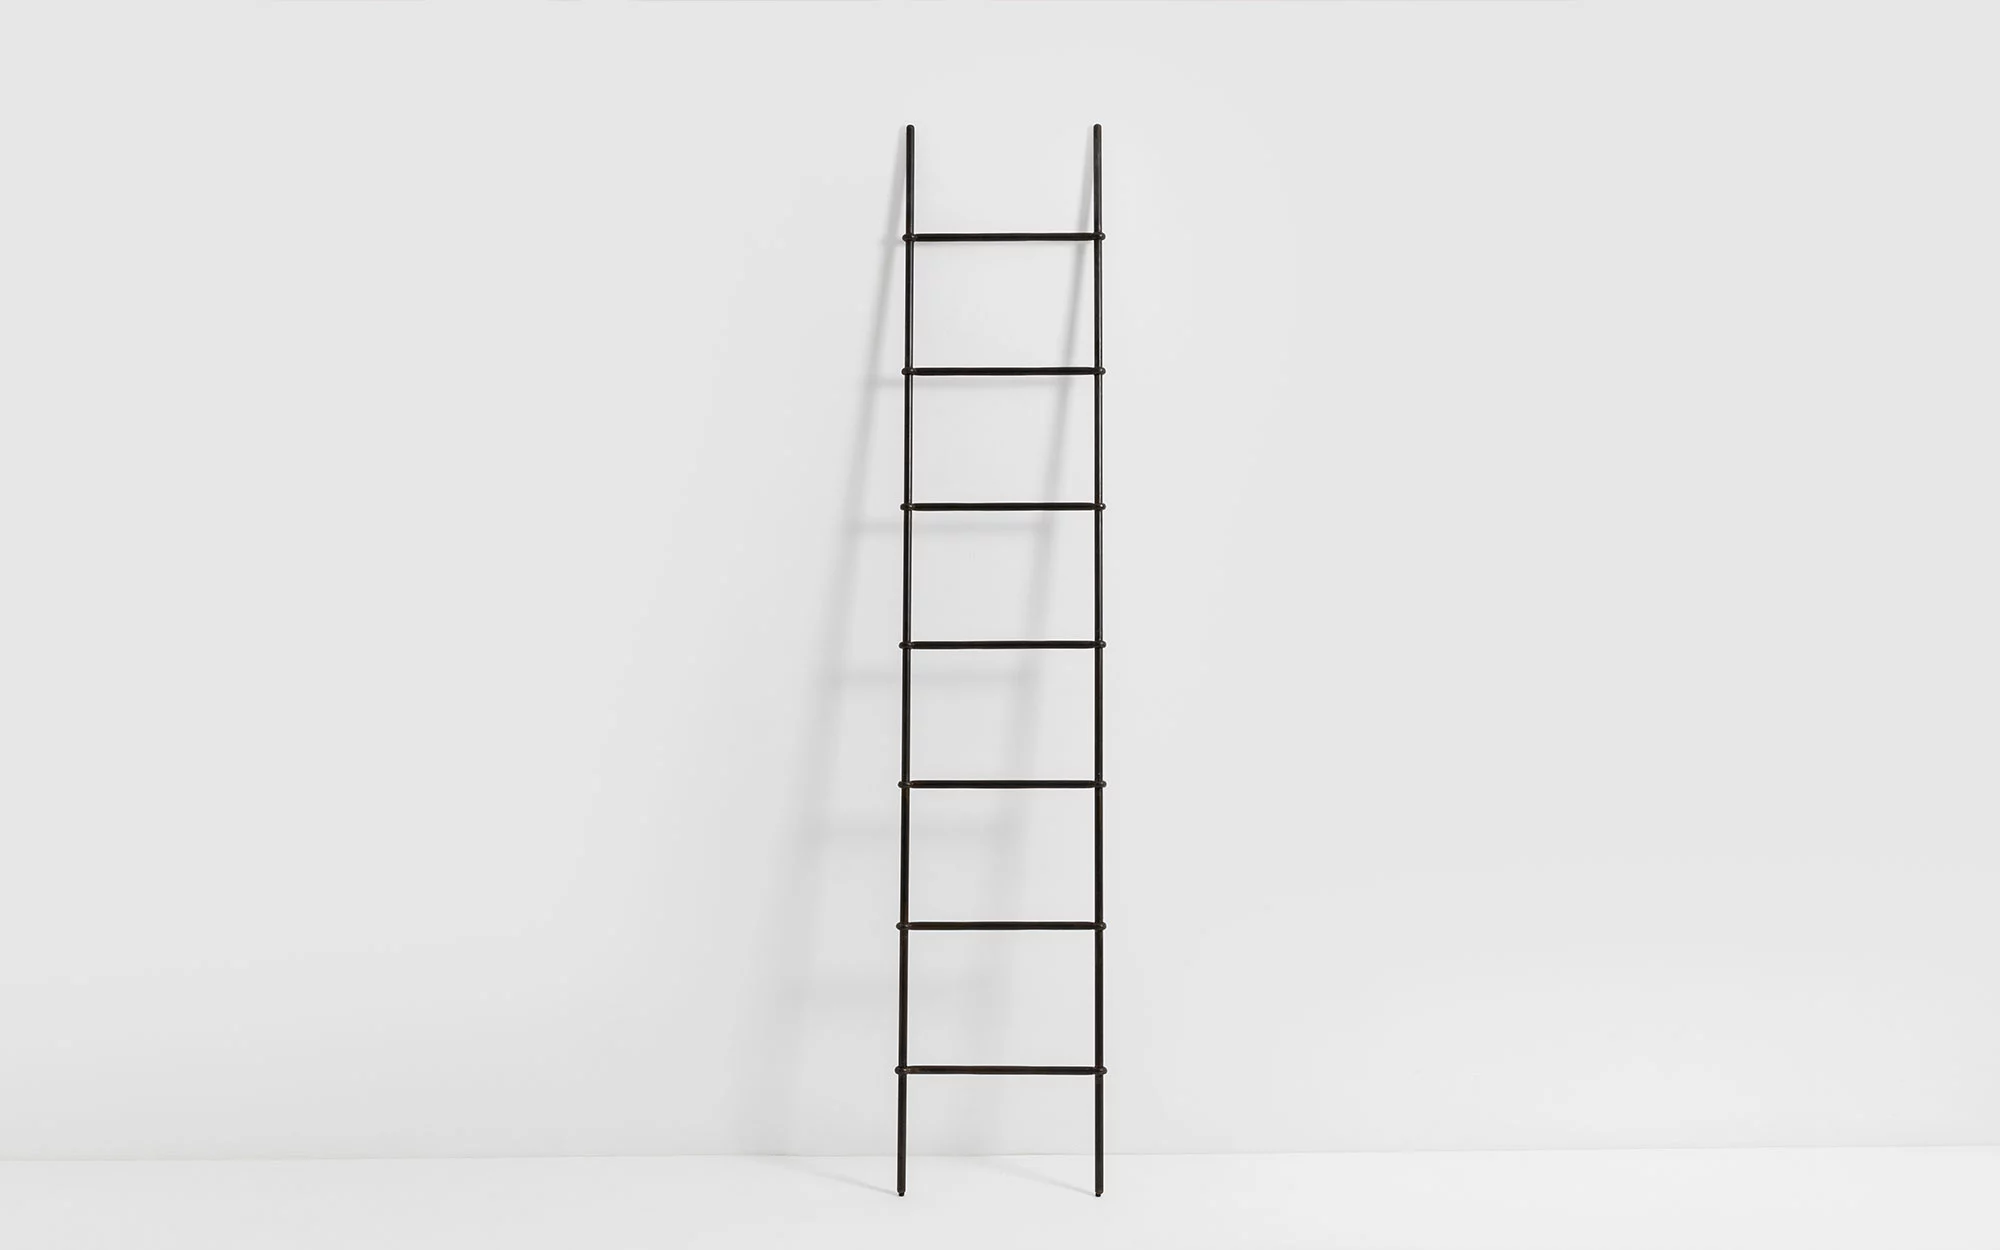 Ciel ladder - Ronan & Erwan Bouroullec - Chair - Galerie kreo